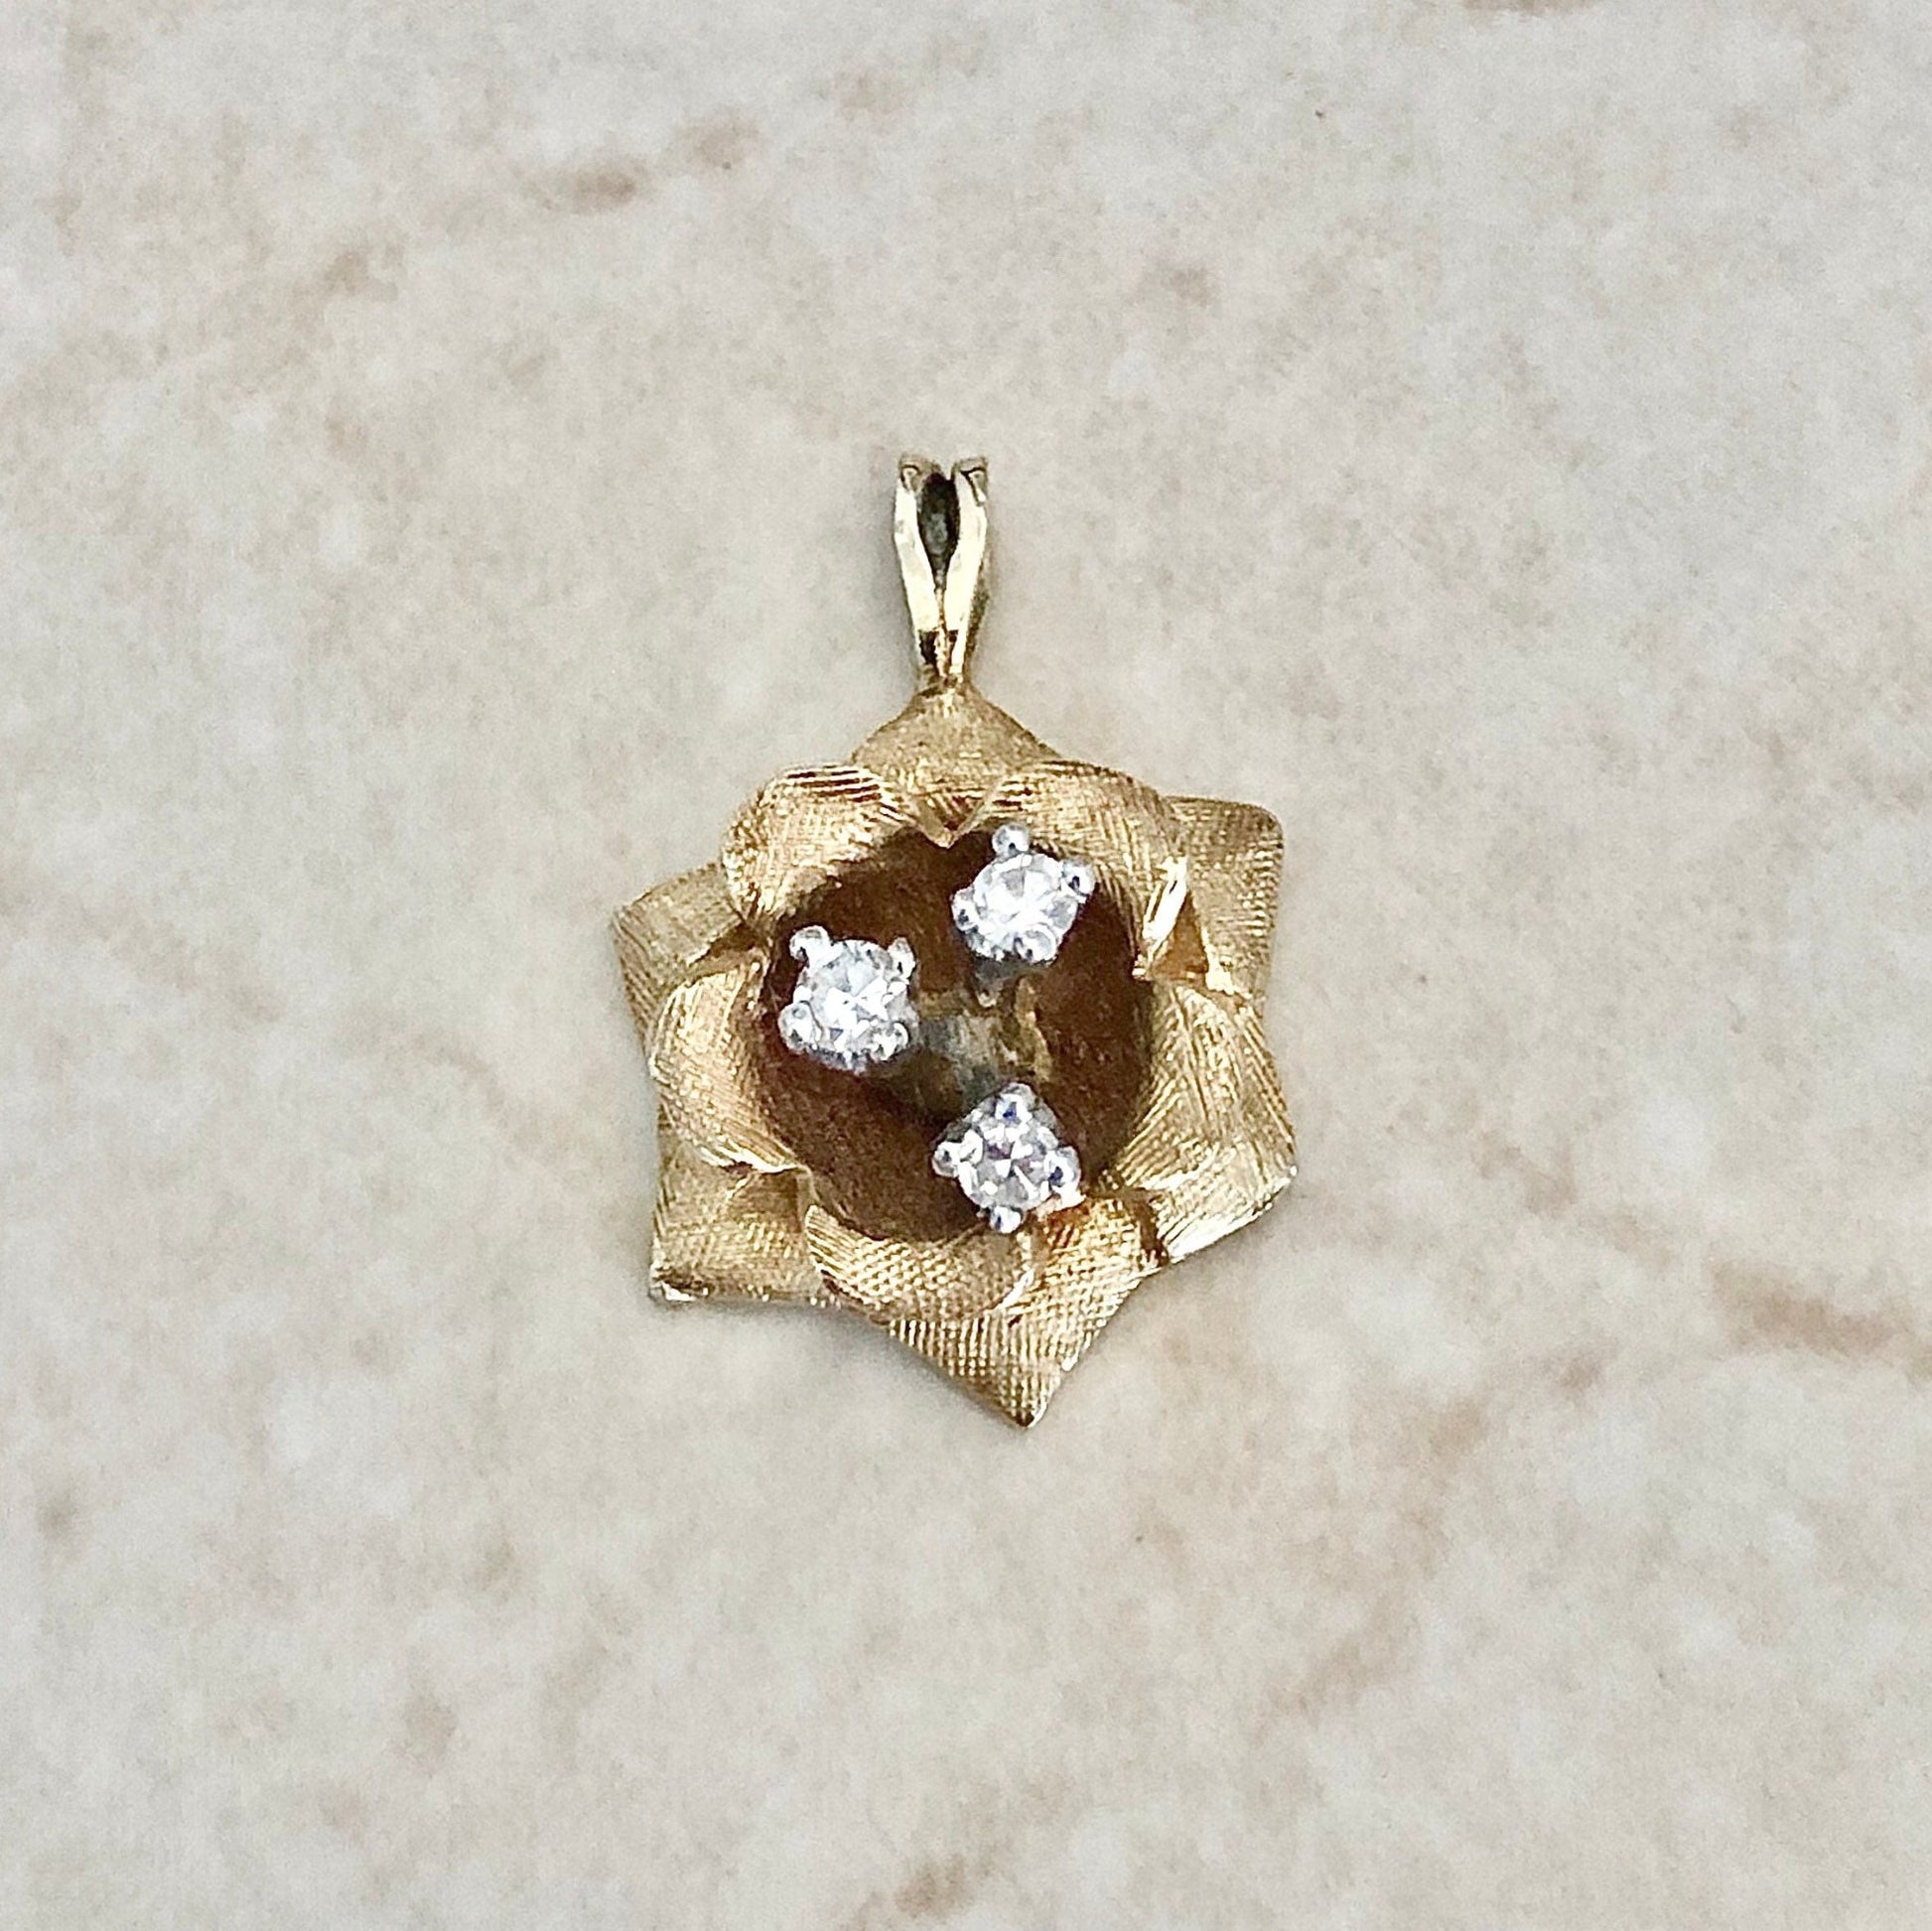 Vintage 14K Diamond Flower Pendant Necklace - 2 Tone Gold - Yellow & White Gold - Diamond Necklace - Bridal Diamond Jewelry - Birthday Gift